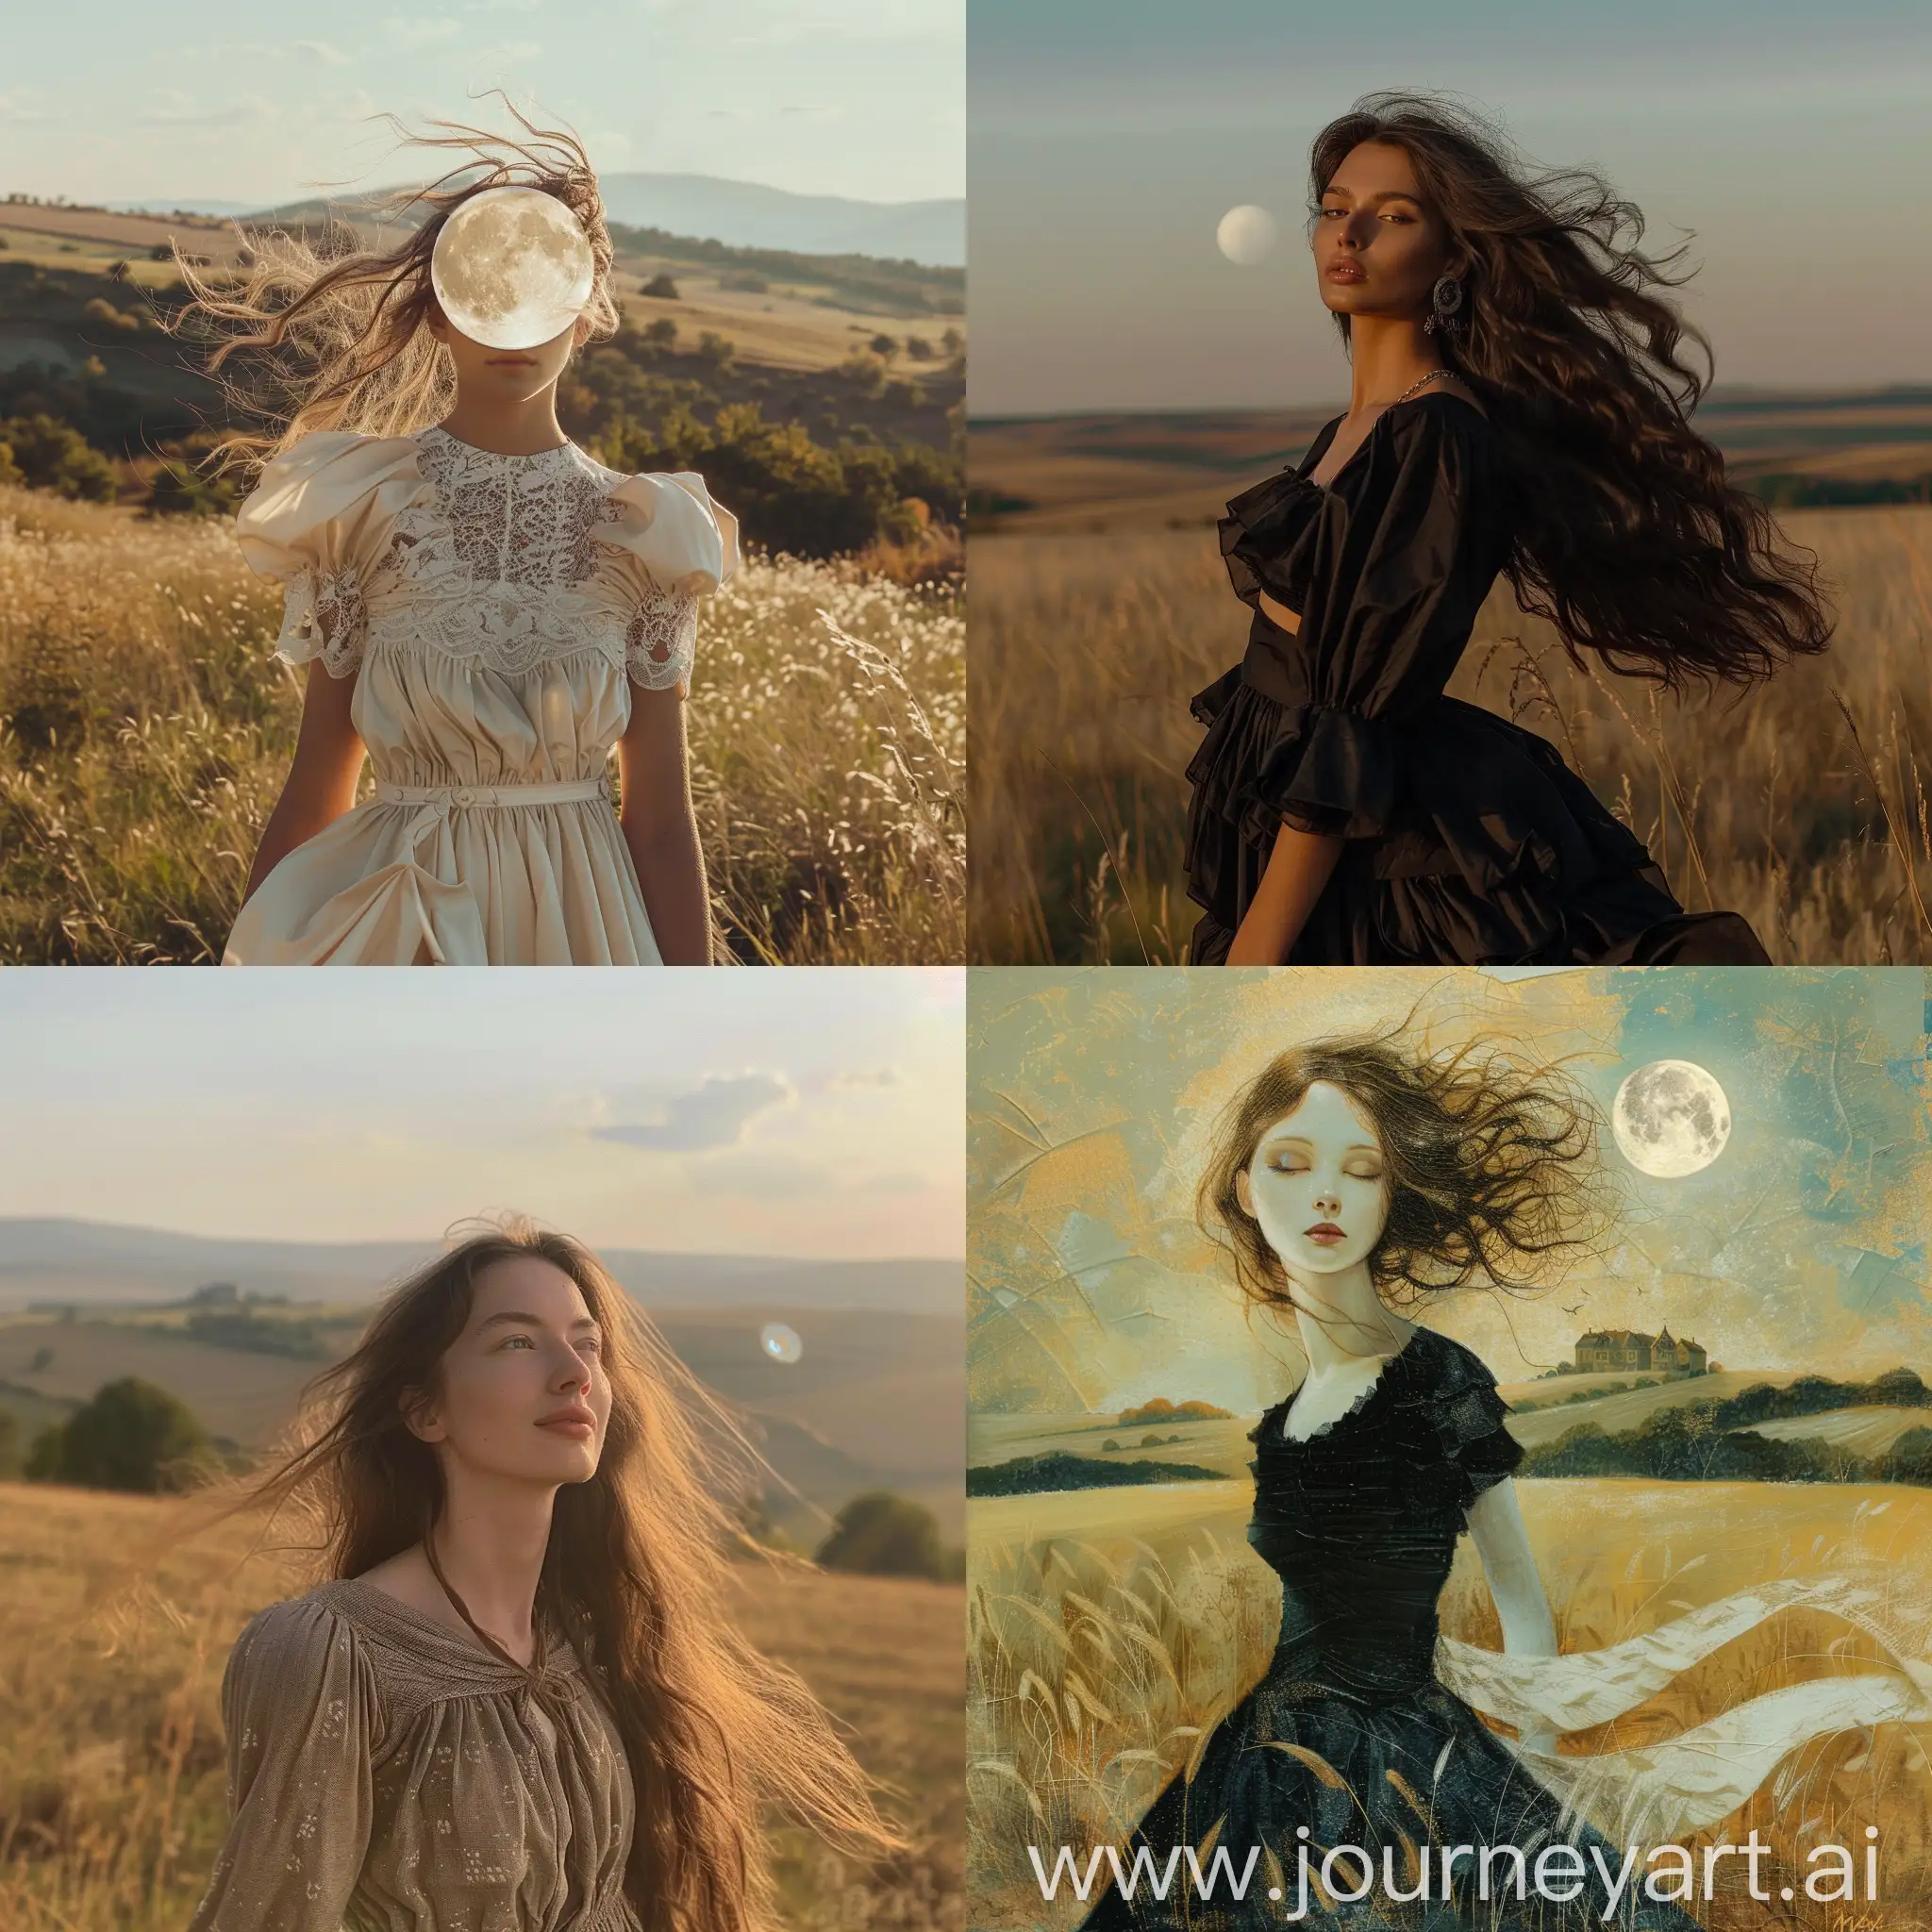 Transylvanian-Dancer-Graceful-Figure-in-Enchanting-Fields